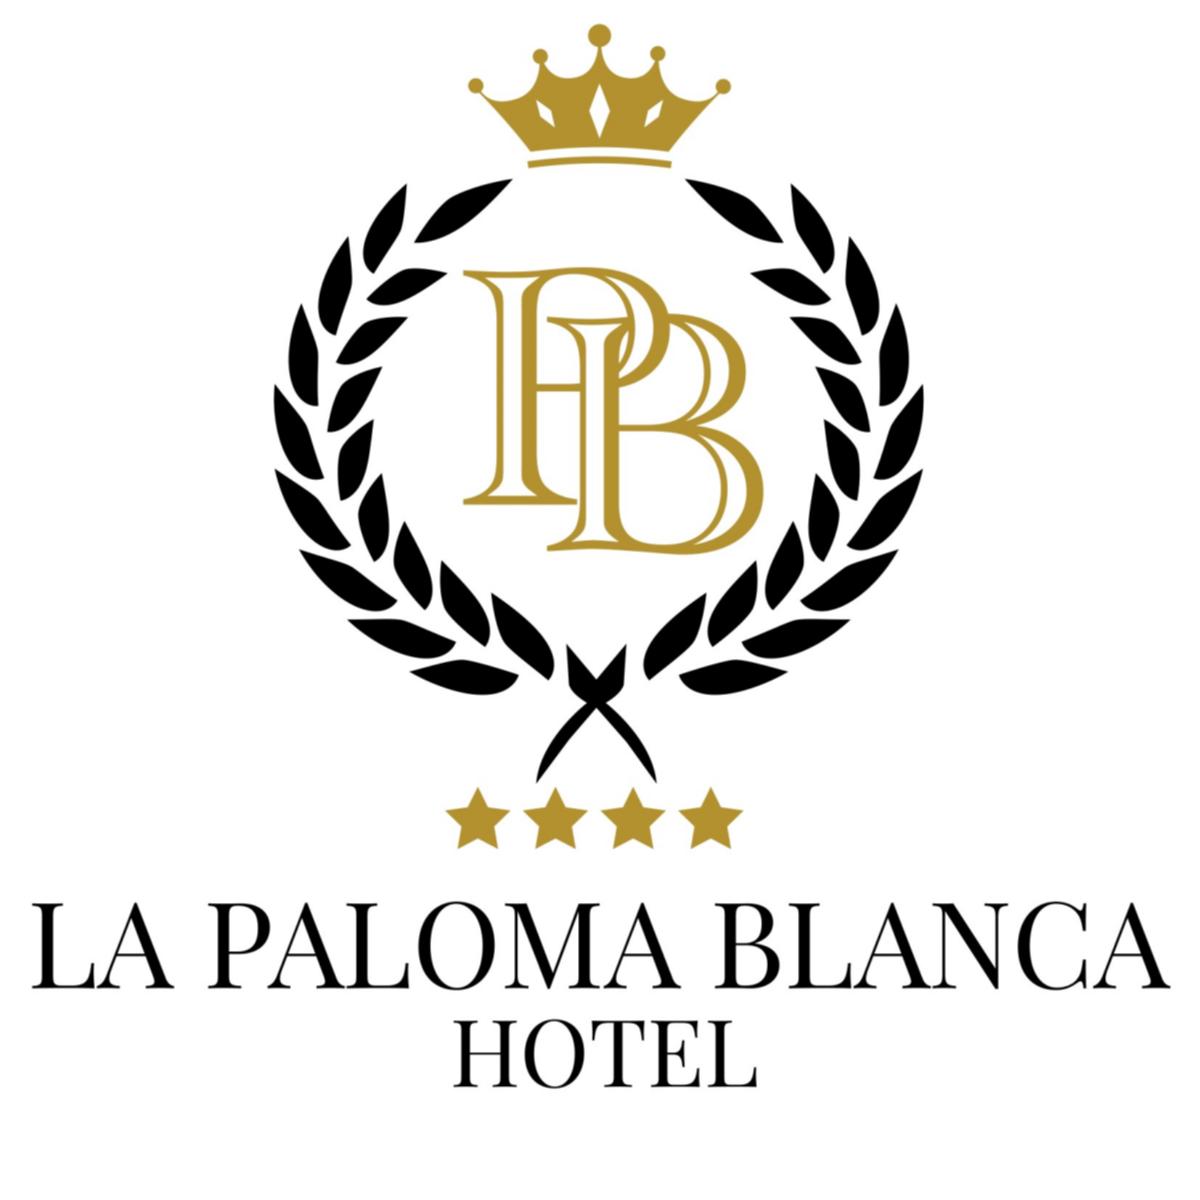 La Paloma Blanca Hotel